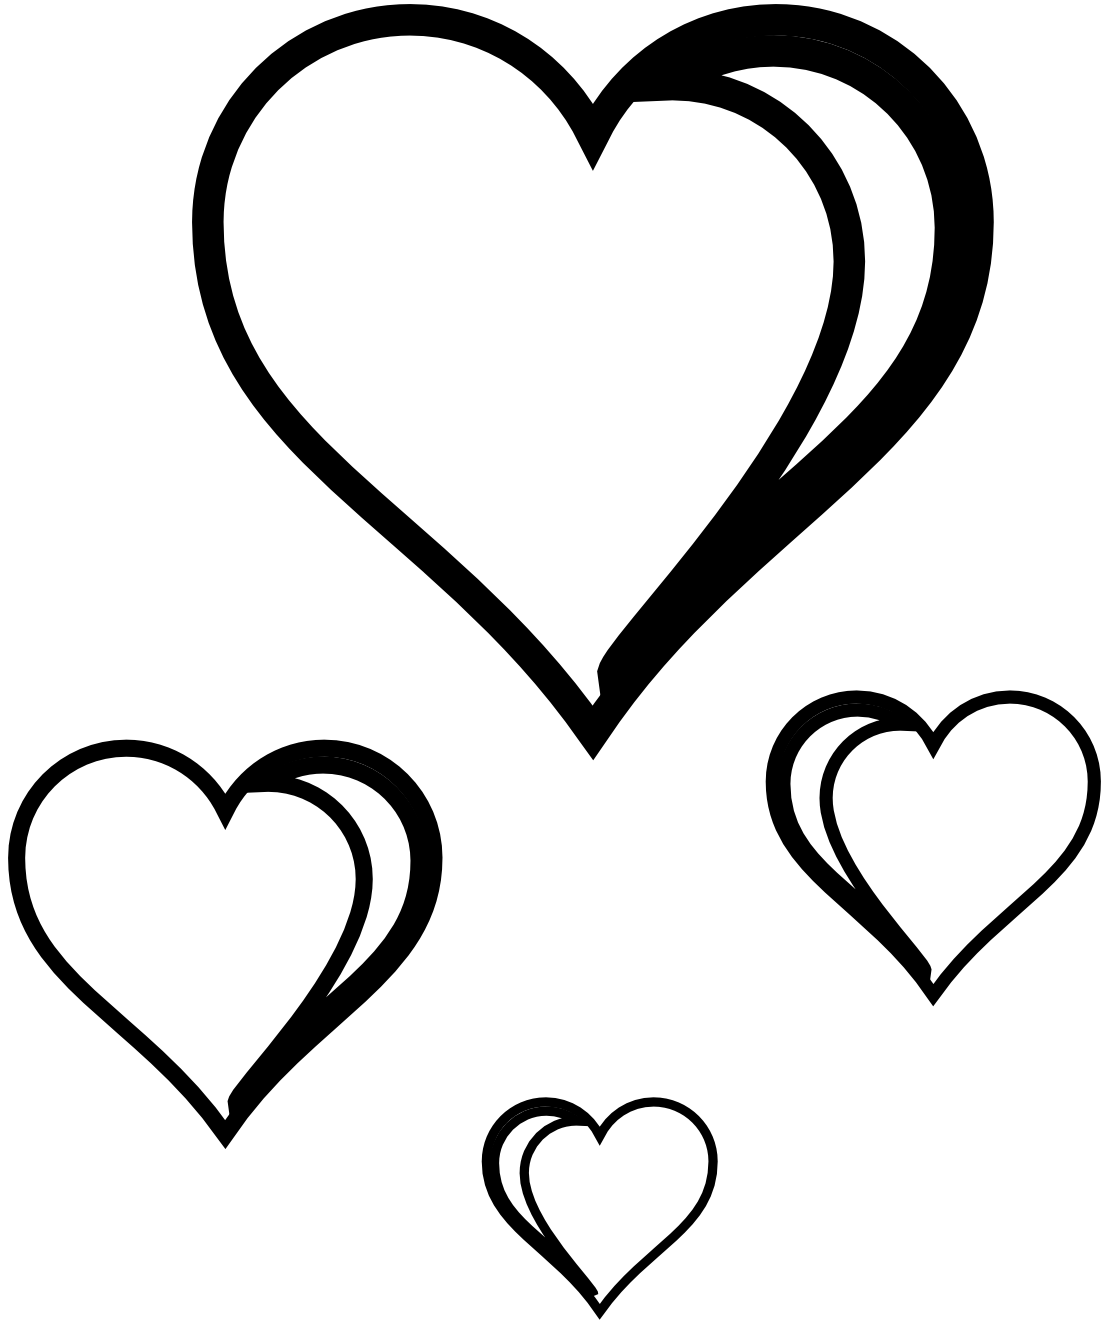 heart clipart black and white design